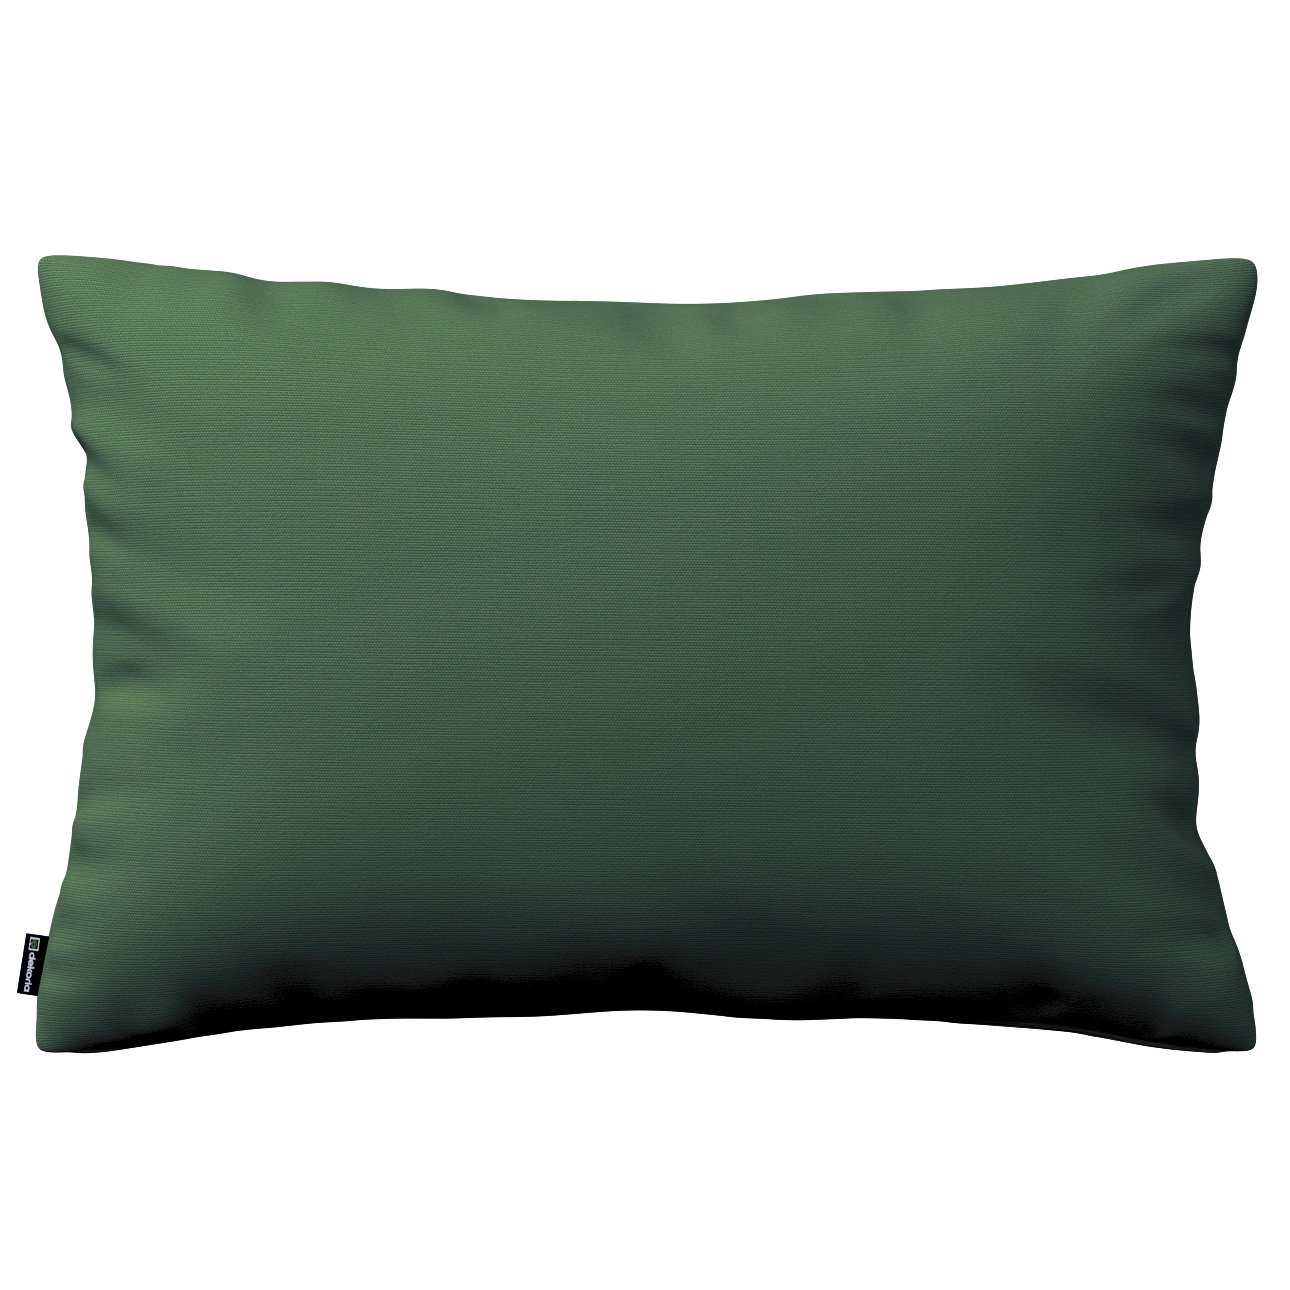 Dekoria Karin - jednoduchá obliečka, 60x40cm, zelená, 60 x 40 cm, Cotton Panama, 702-06